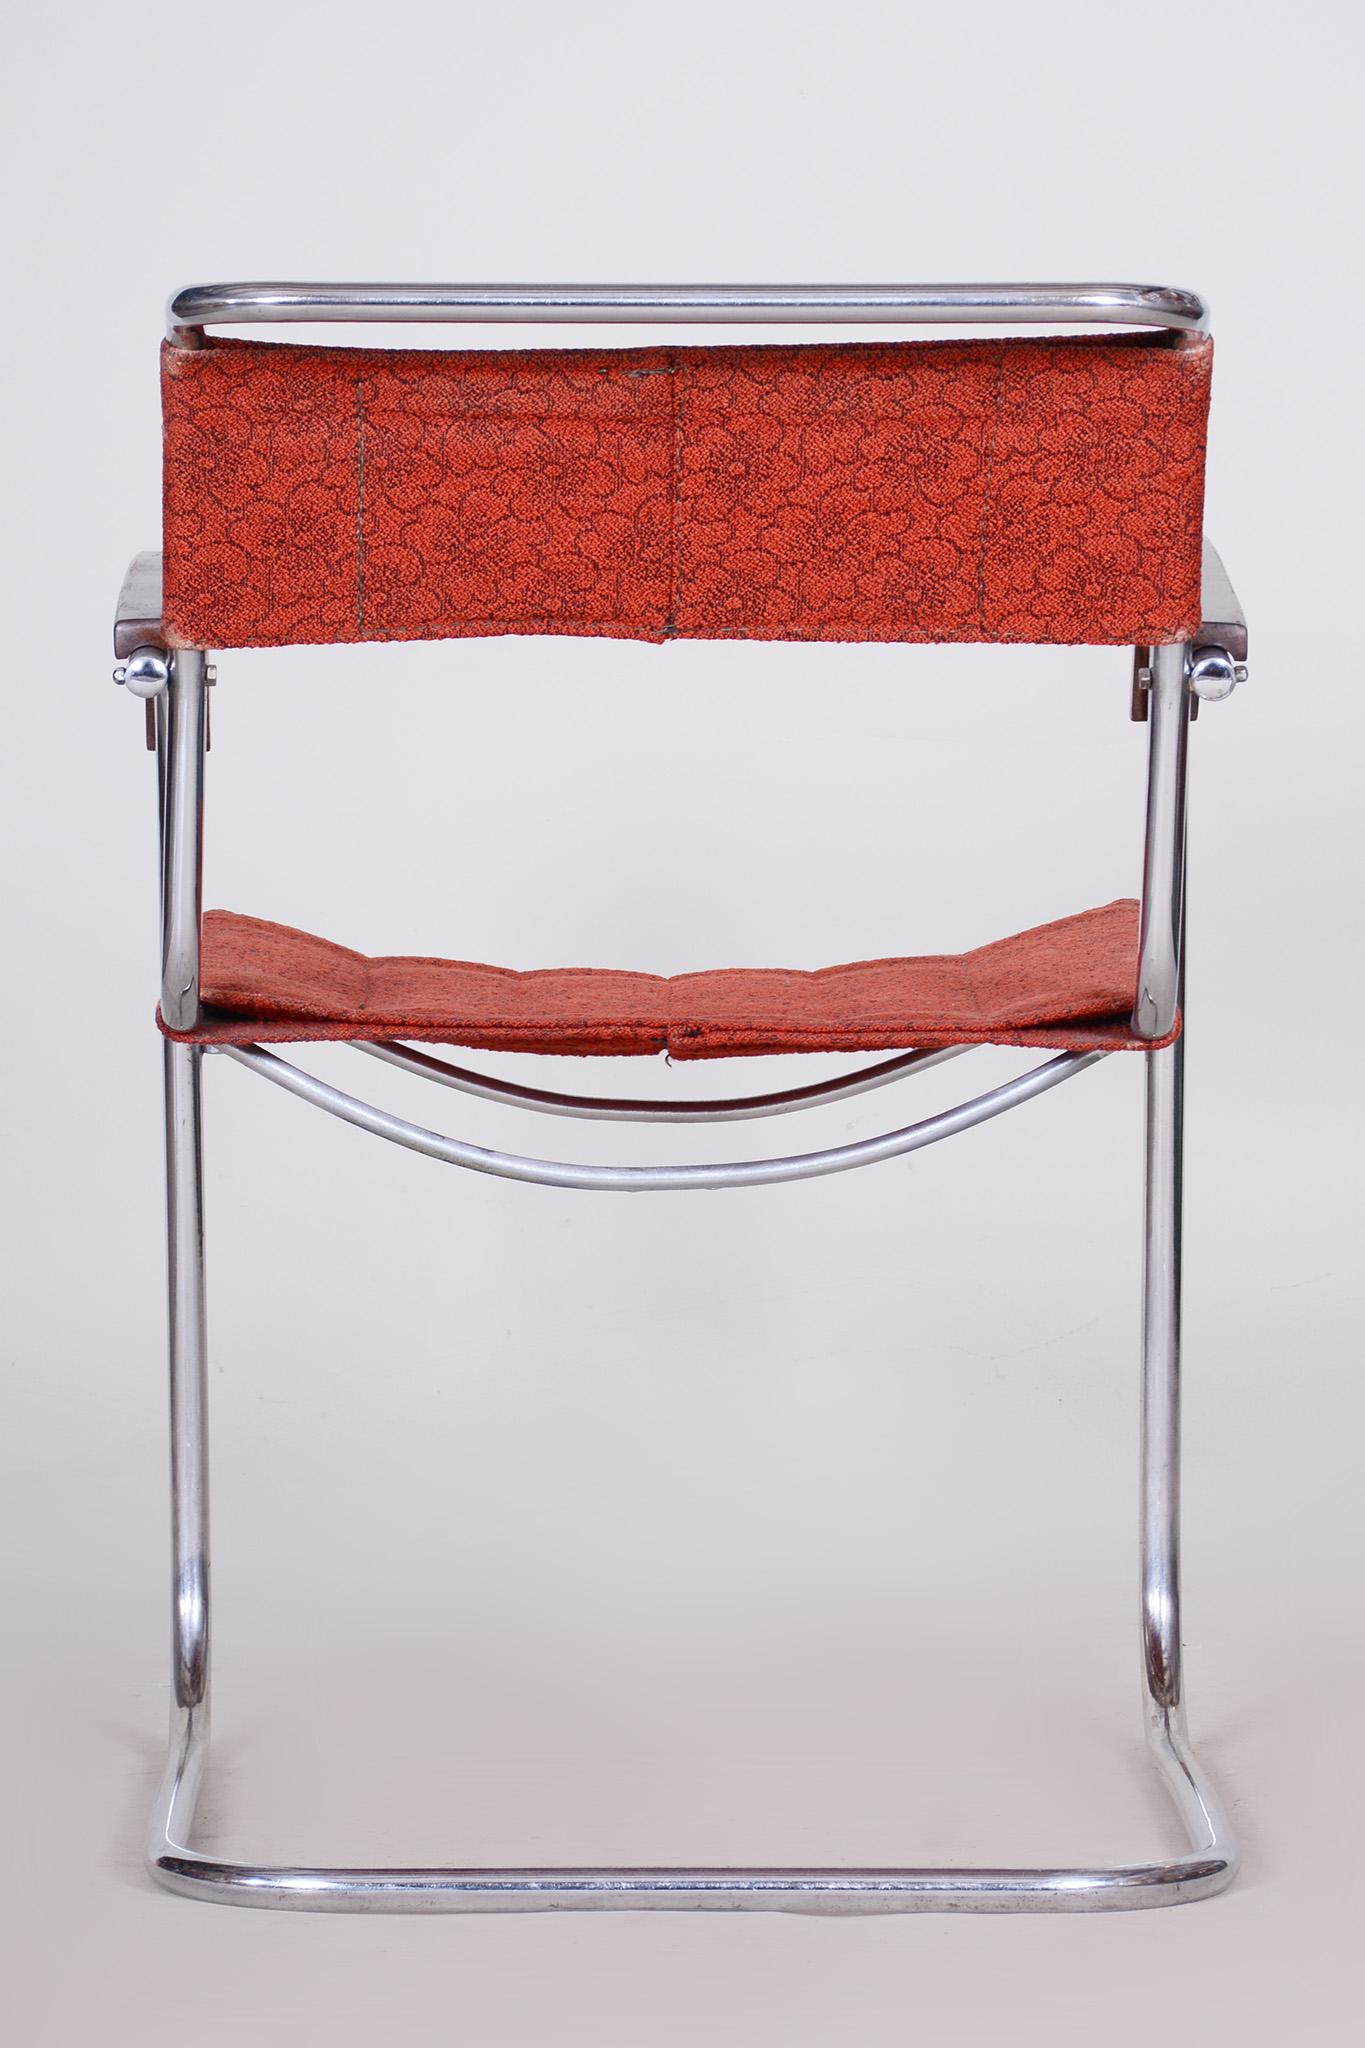 Red Bauhaus Armchair by Marcel Breuer, Mücke, Melder, Beech, Chrome, 1930s For Sale 5